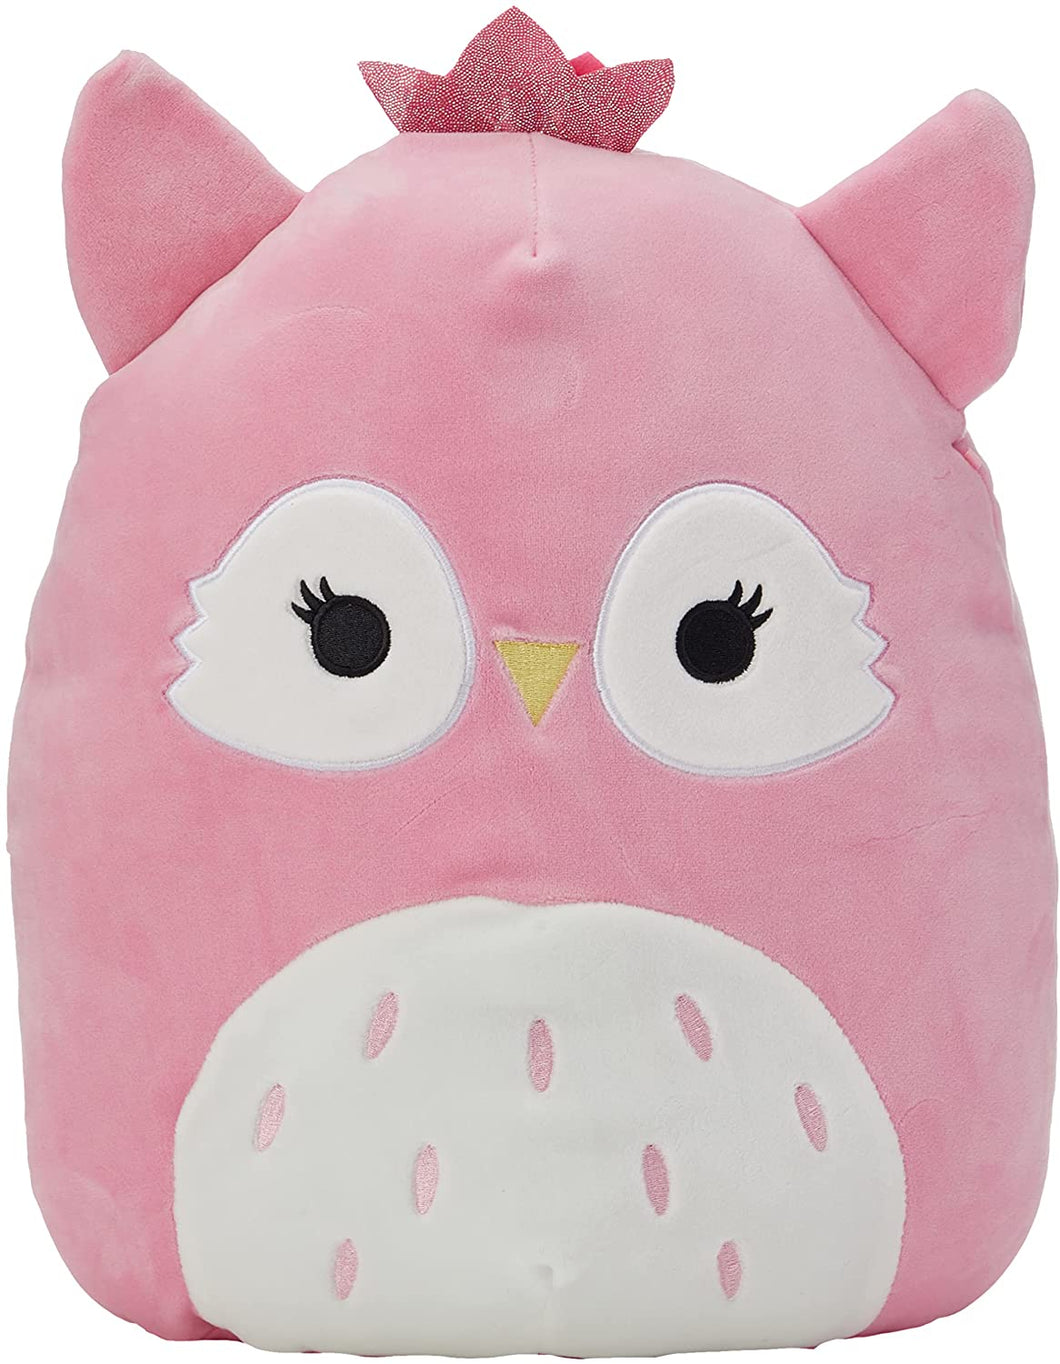 Squishmallows Bri The Pink Owl 12